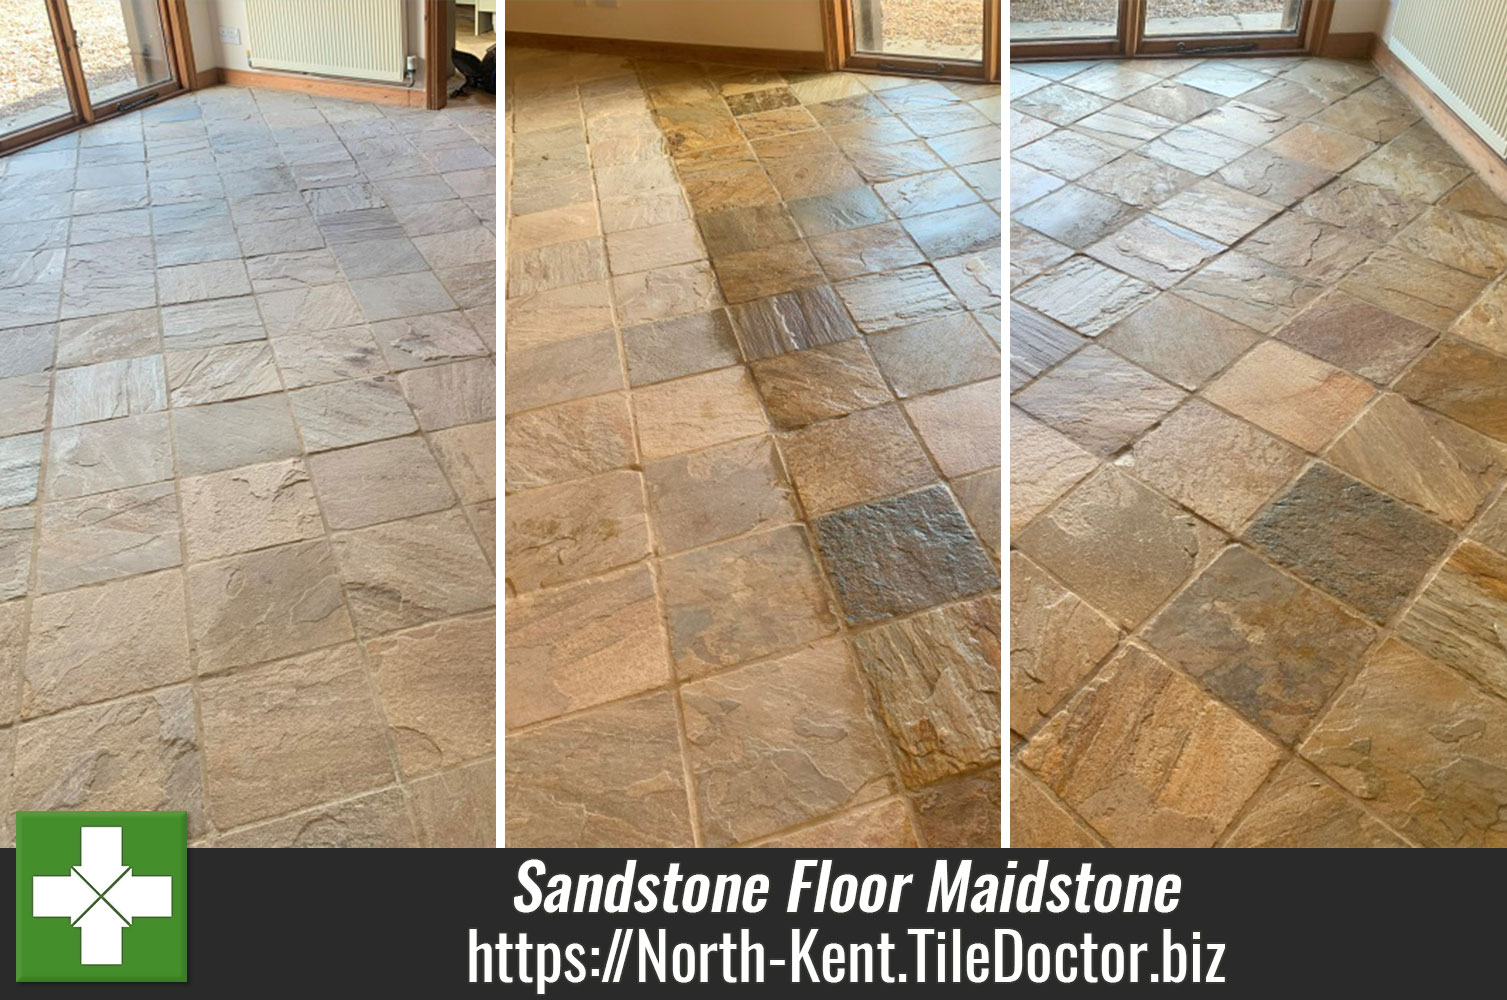 Tile Doctor X-Tra Seal Used to Rejuvenate Sandstone Flooring in Maidstone Kent